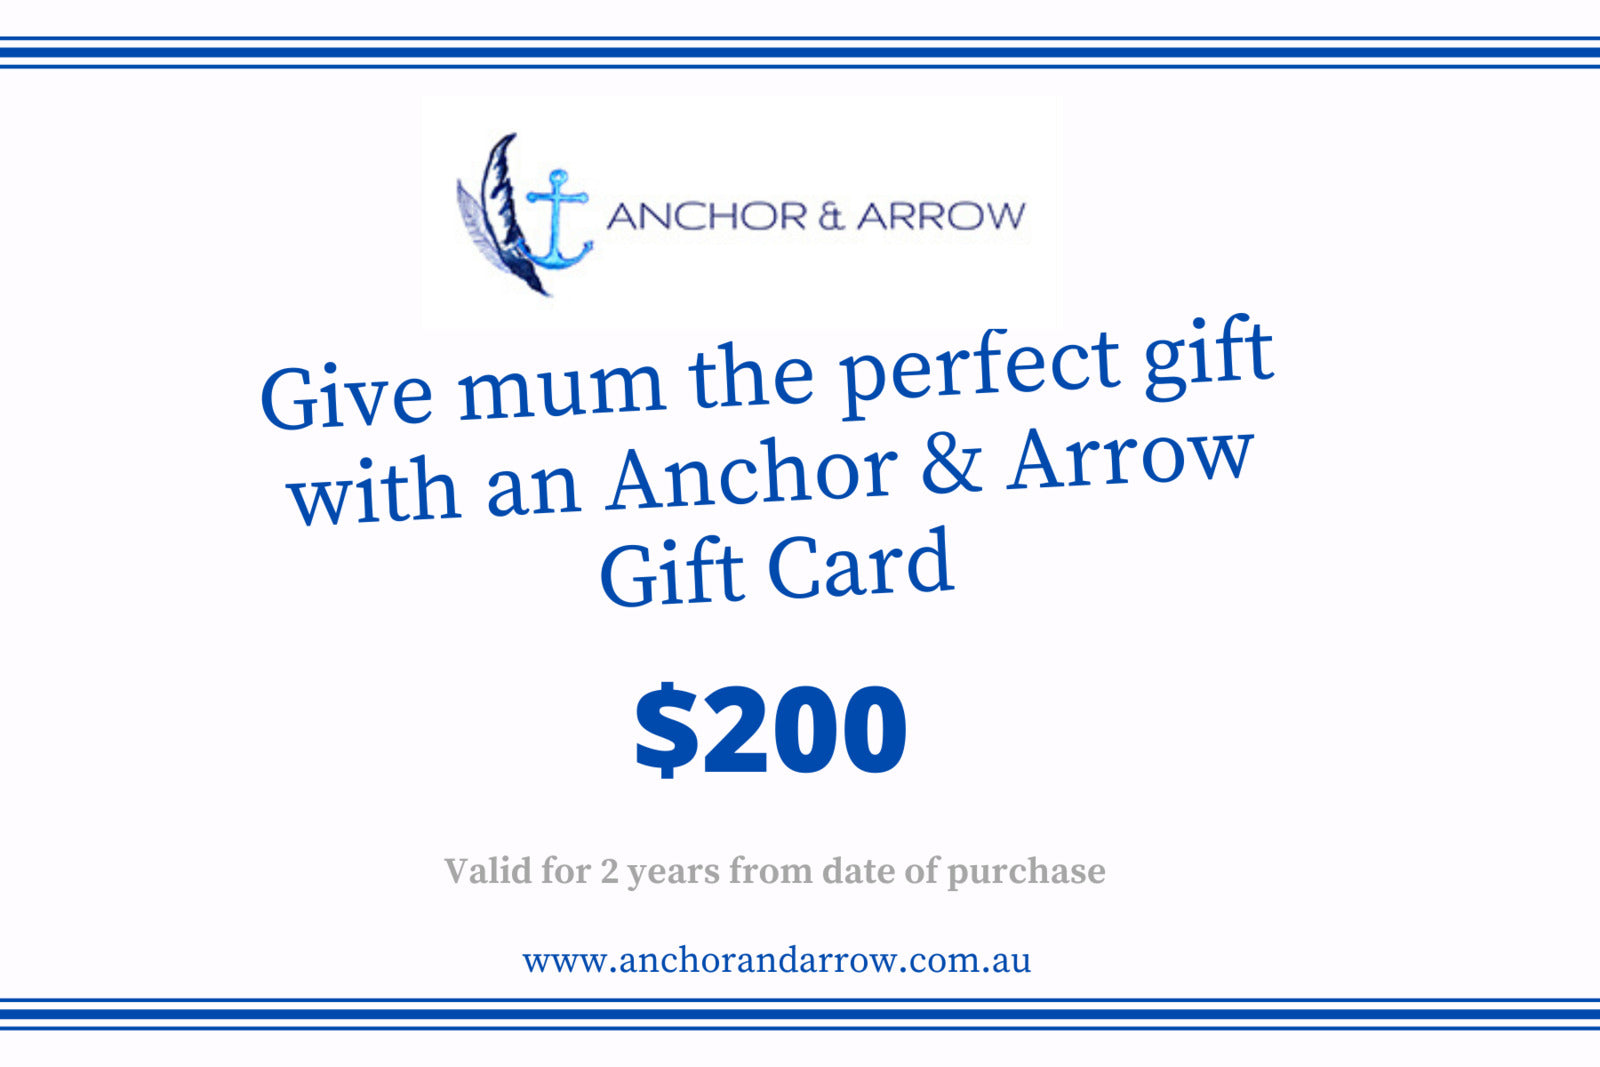 Anchor & Arrow Gift Card - $200